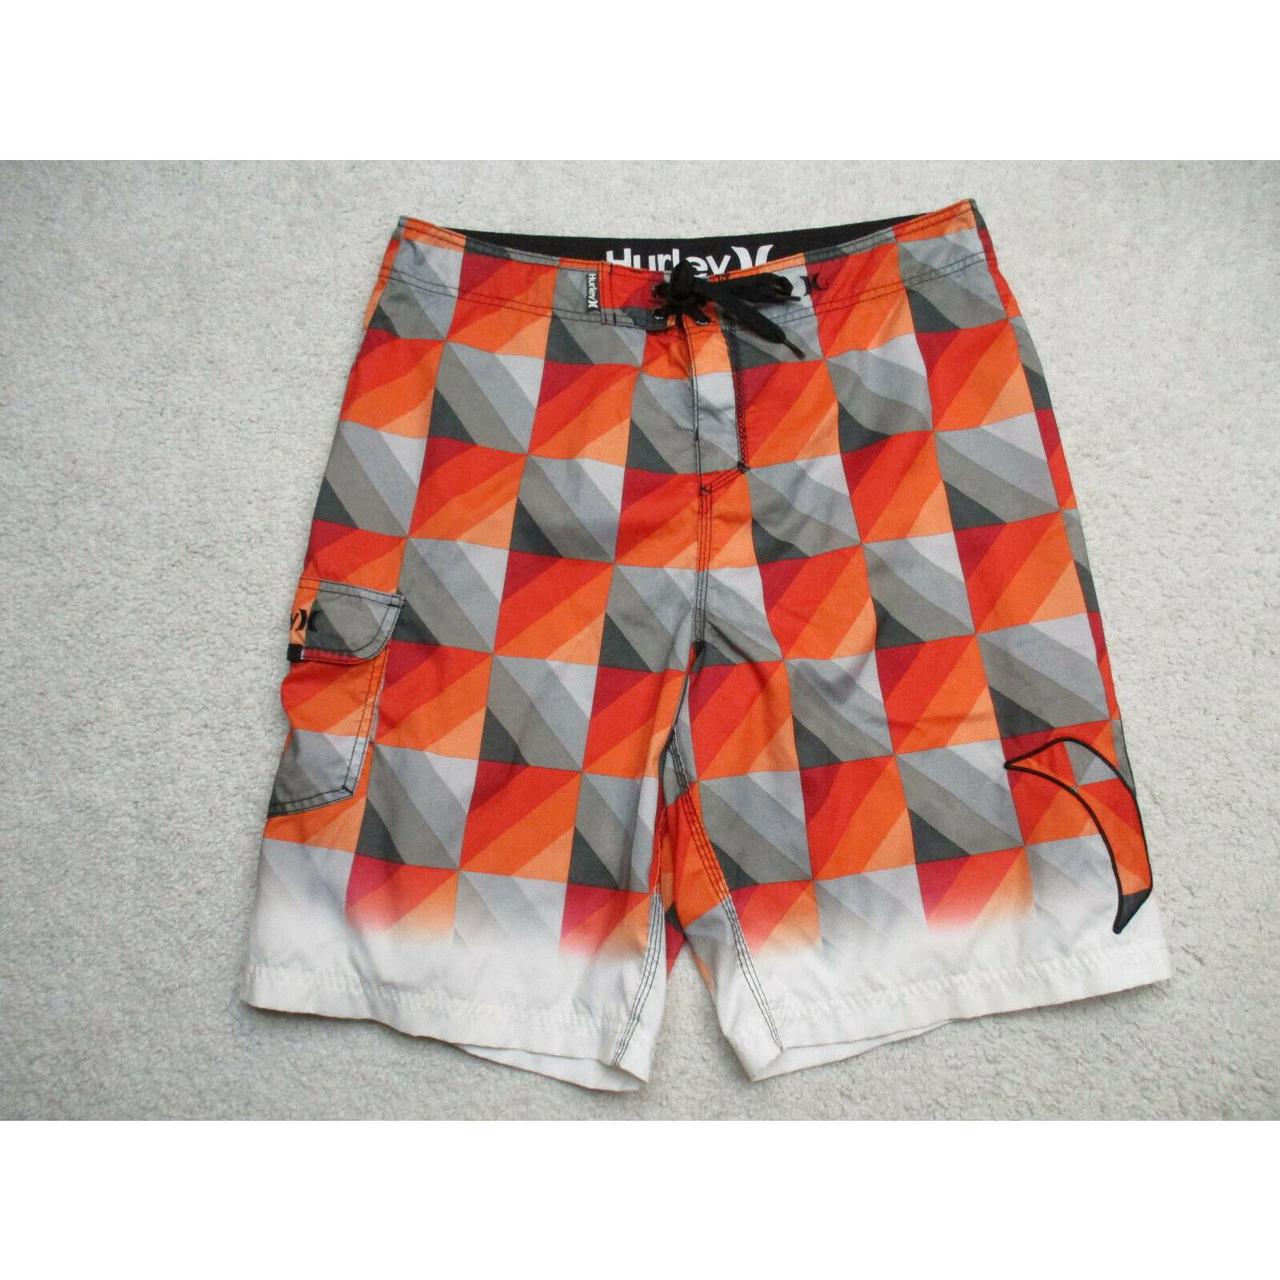 Hurley Men's Orange Shorts |